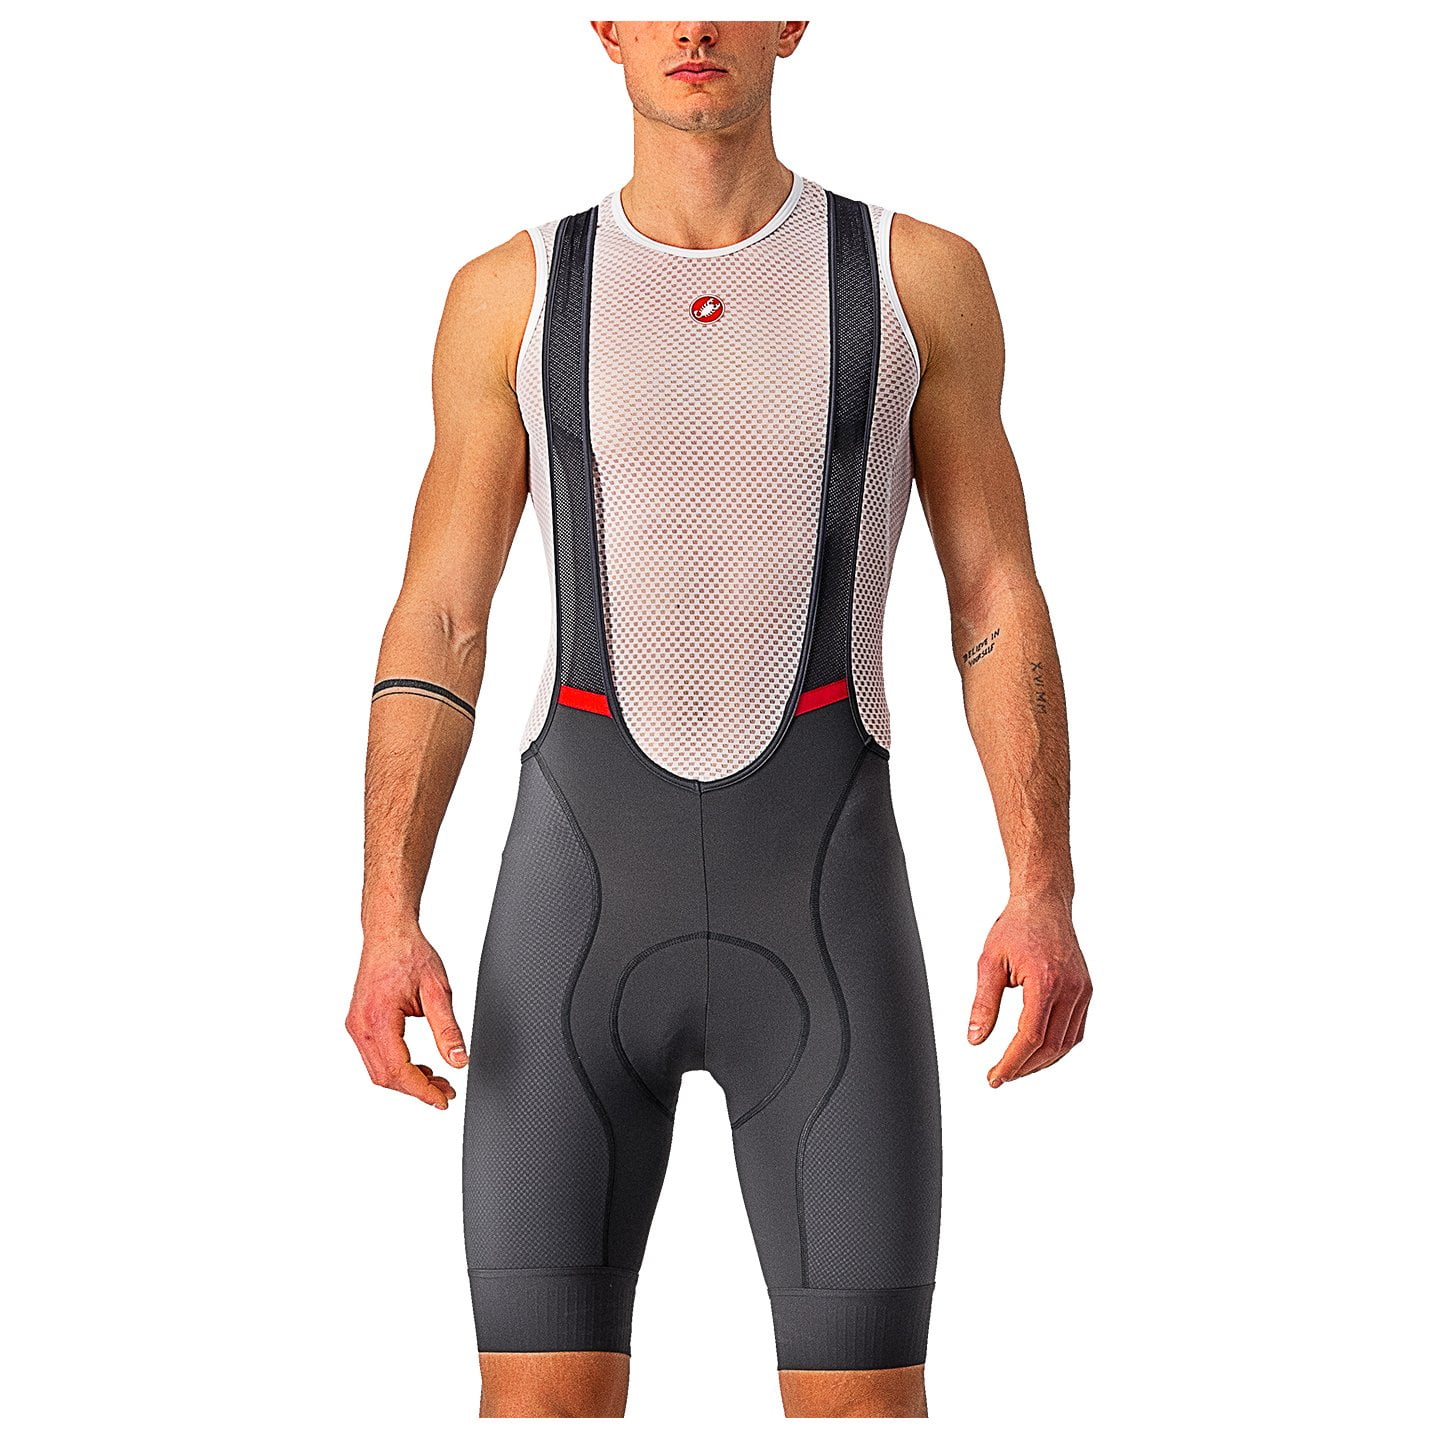 Competizione Bib Shorts Bib Shorts, for men, size M, Cycle shorts, Cycling clothing